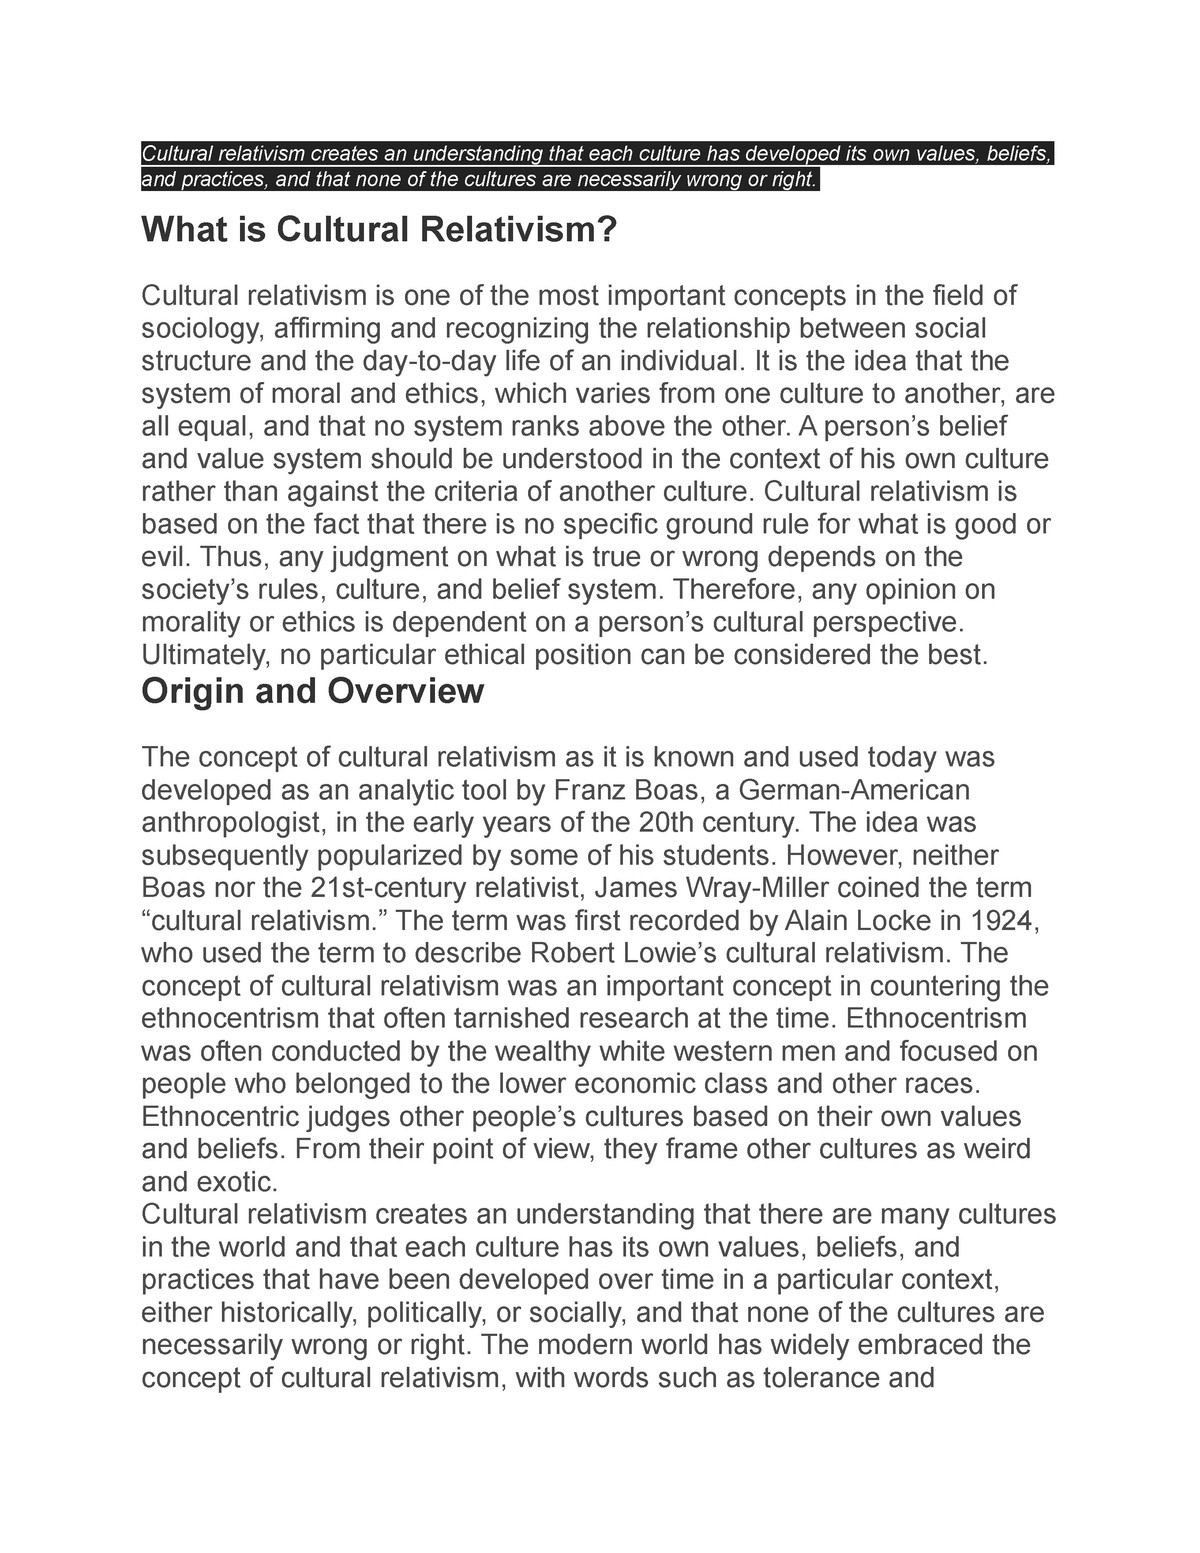 make an essay regarding cultural relativism